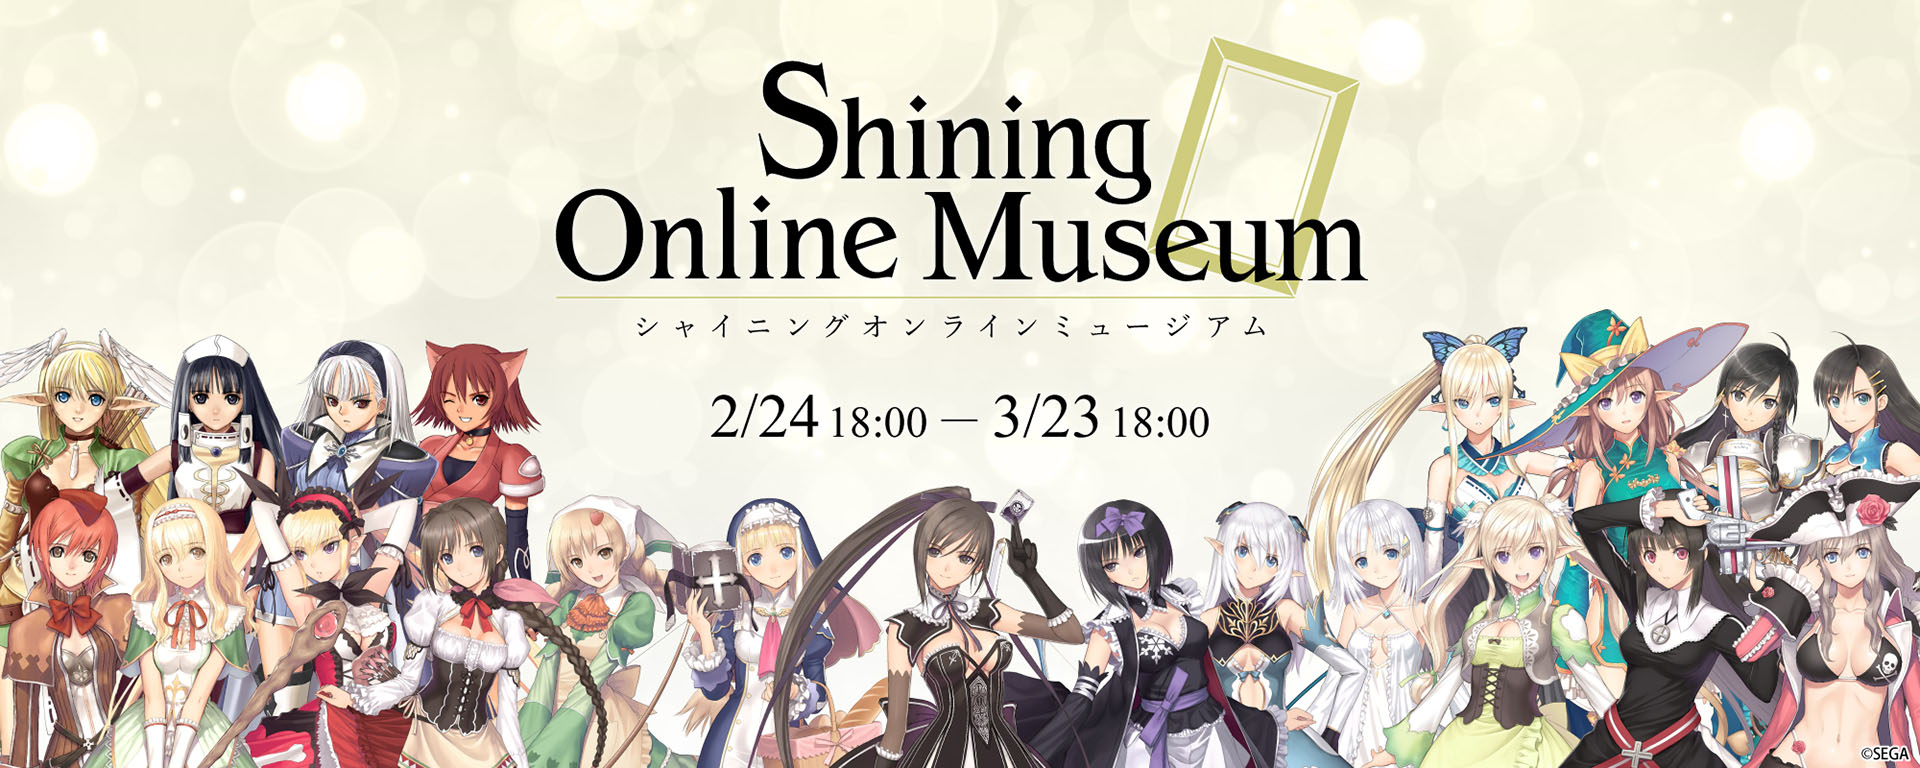 Shining Online Museum